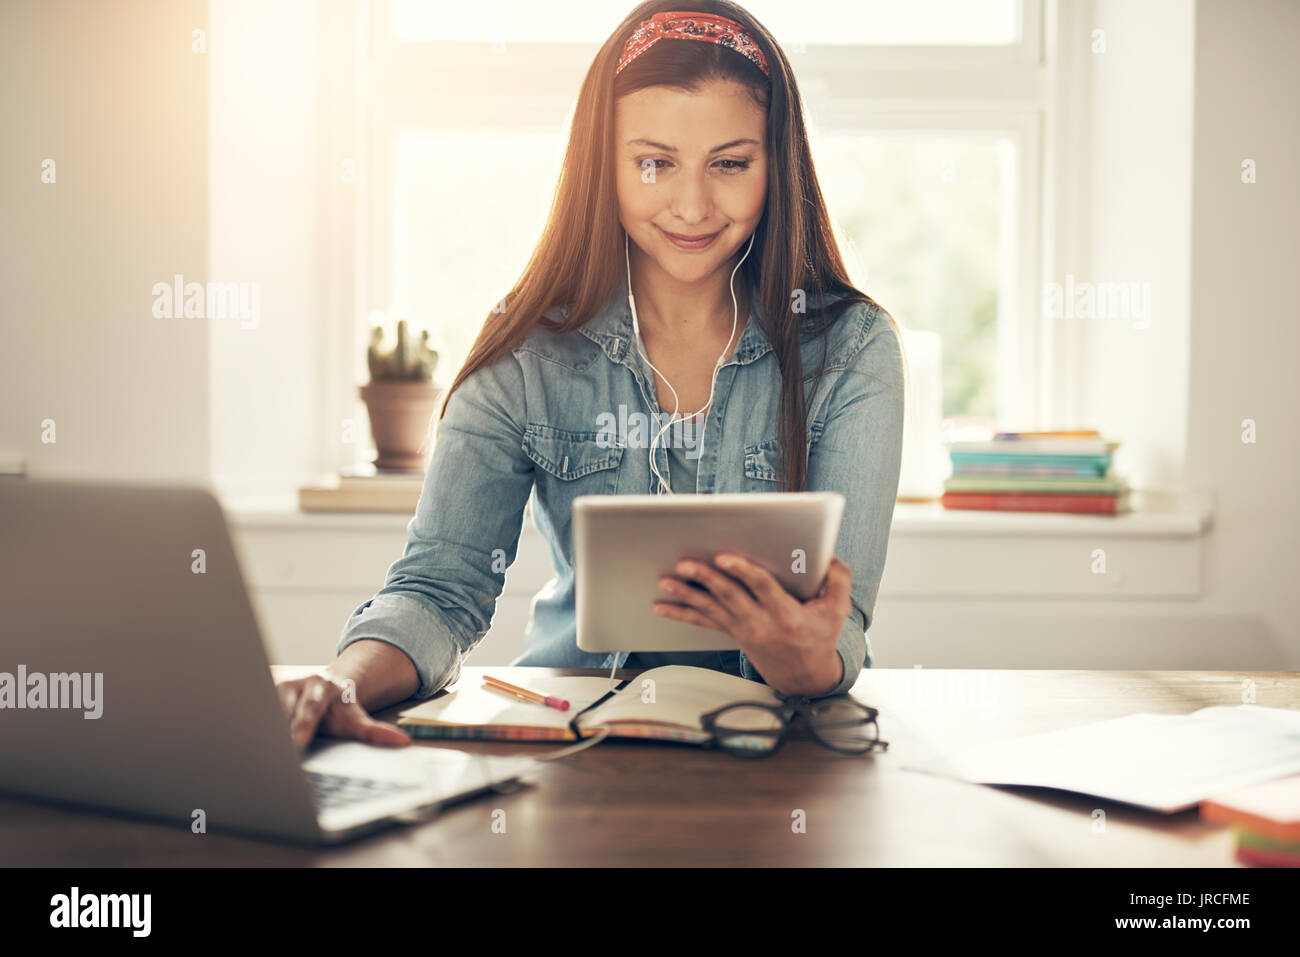 Smiling young woman wearing earphones entrepreneur et la navigation tablet while sitting at desk in office. Banque D'Images